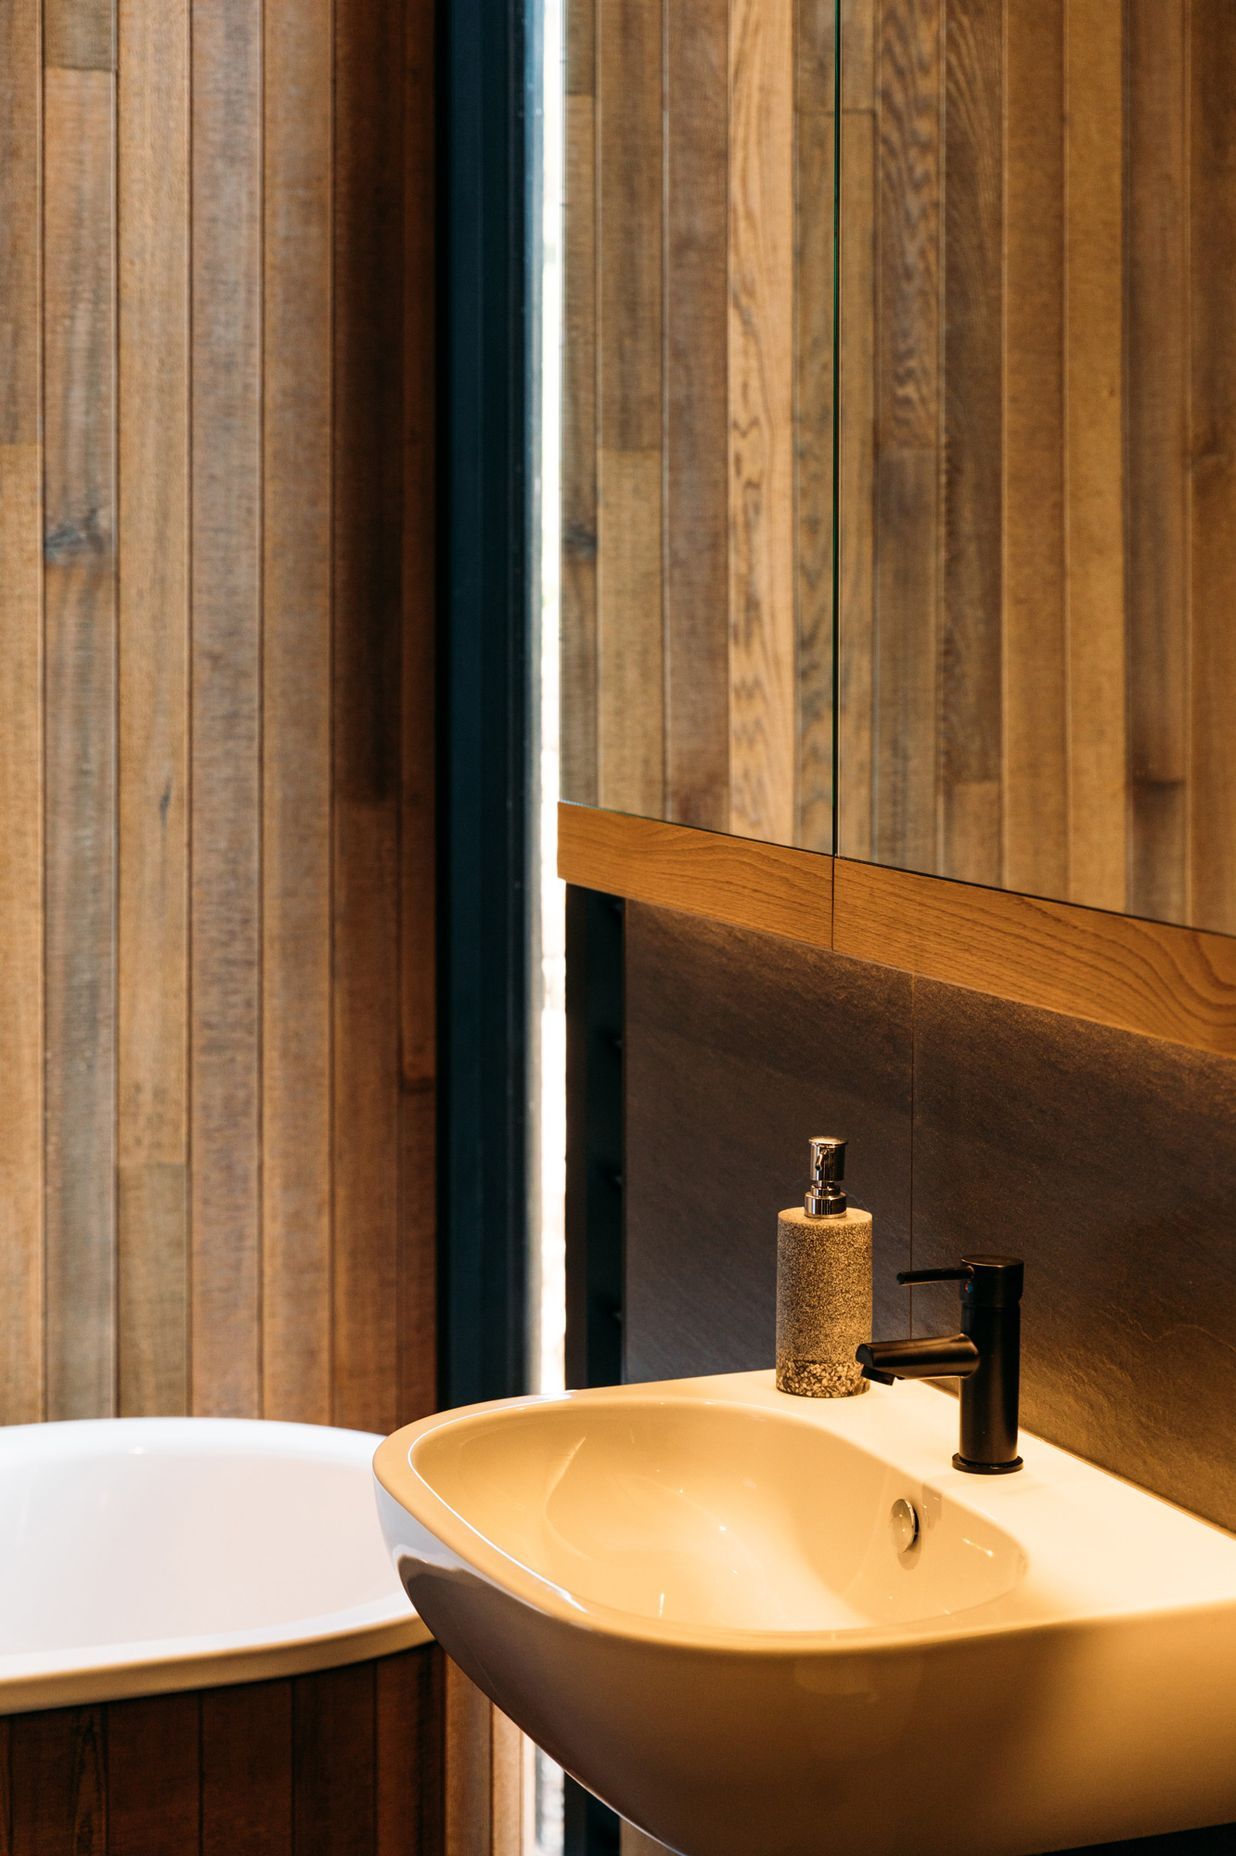 Oahu matt porcelain tiles add textural contrast to the cedar in the main bathroom.